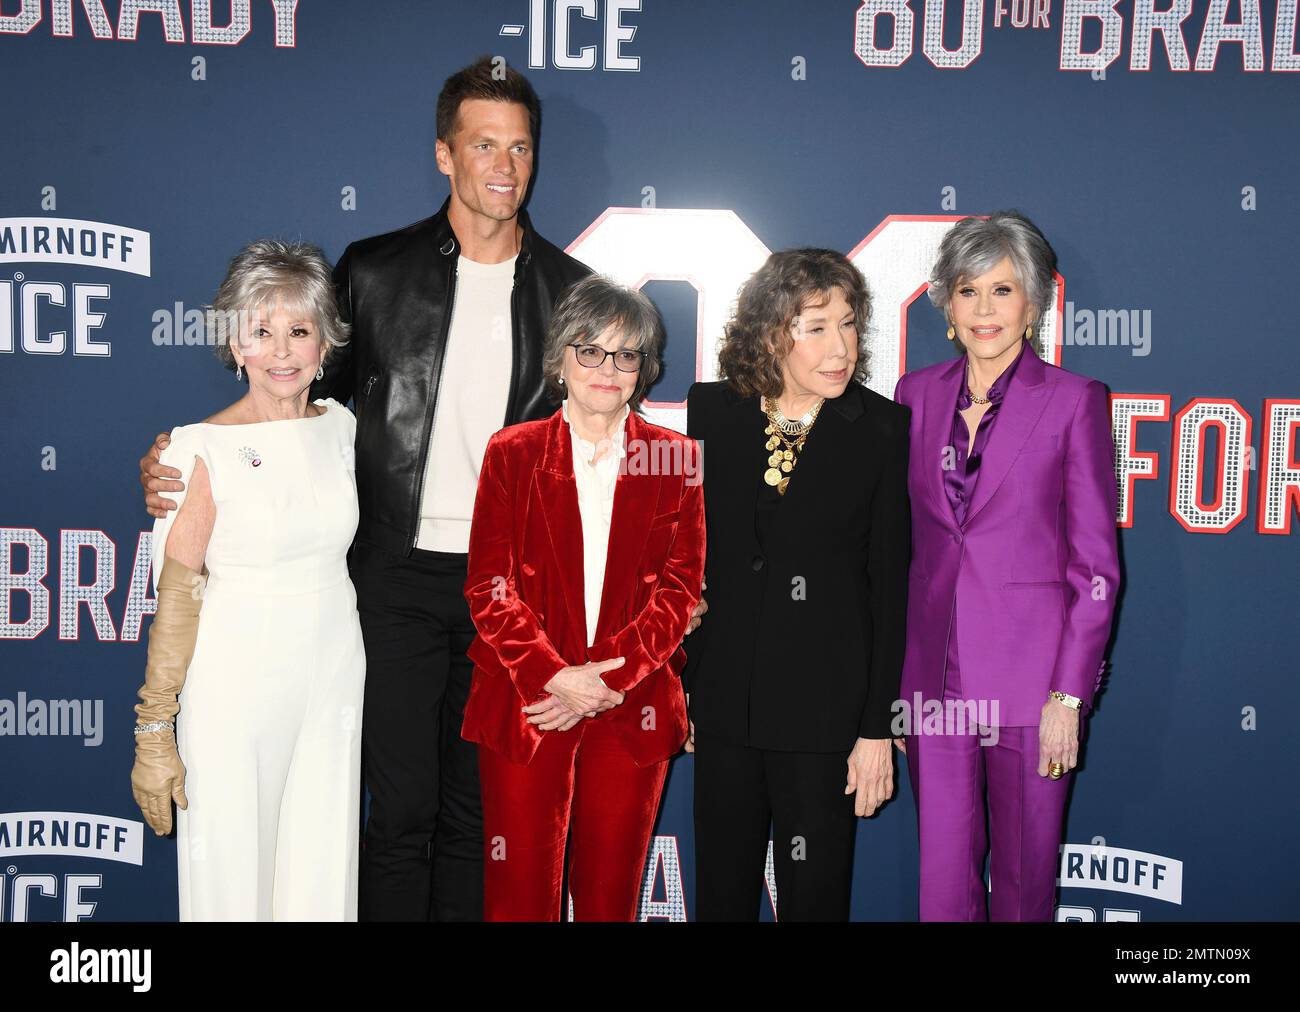 LOS ANGELES, CA - 31. JANUAR: (L-R) Rita Moreno, Tom Brady, Sally Field, Lily Tomlin und Jane Fonda nehmen an der Premiere von Param in Los Angeles Teil Stockfoto